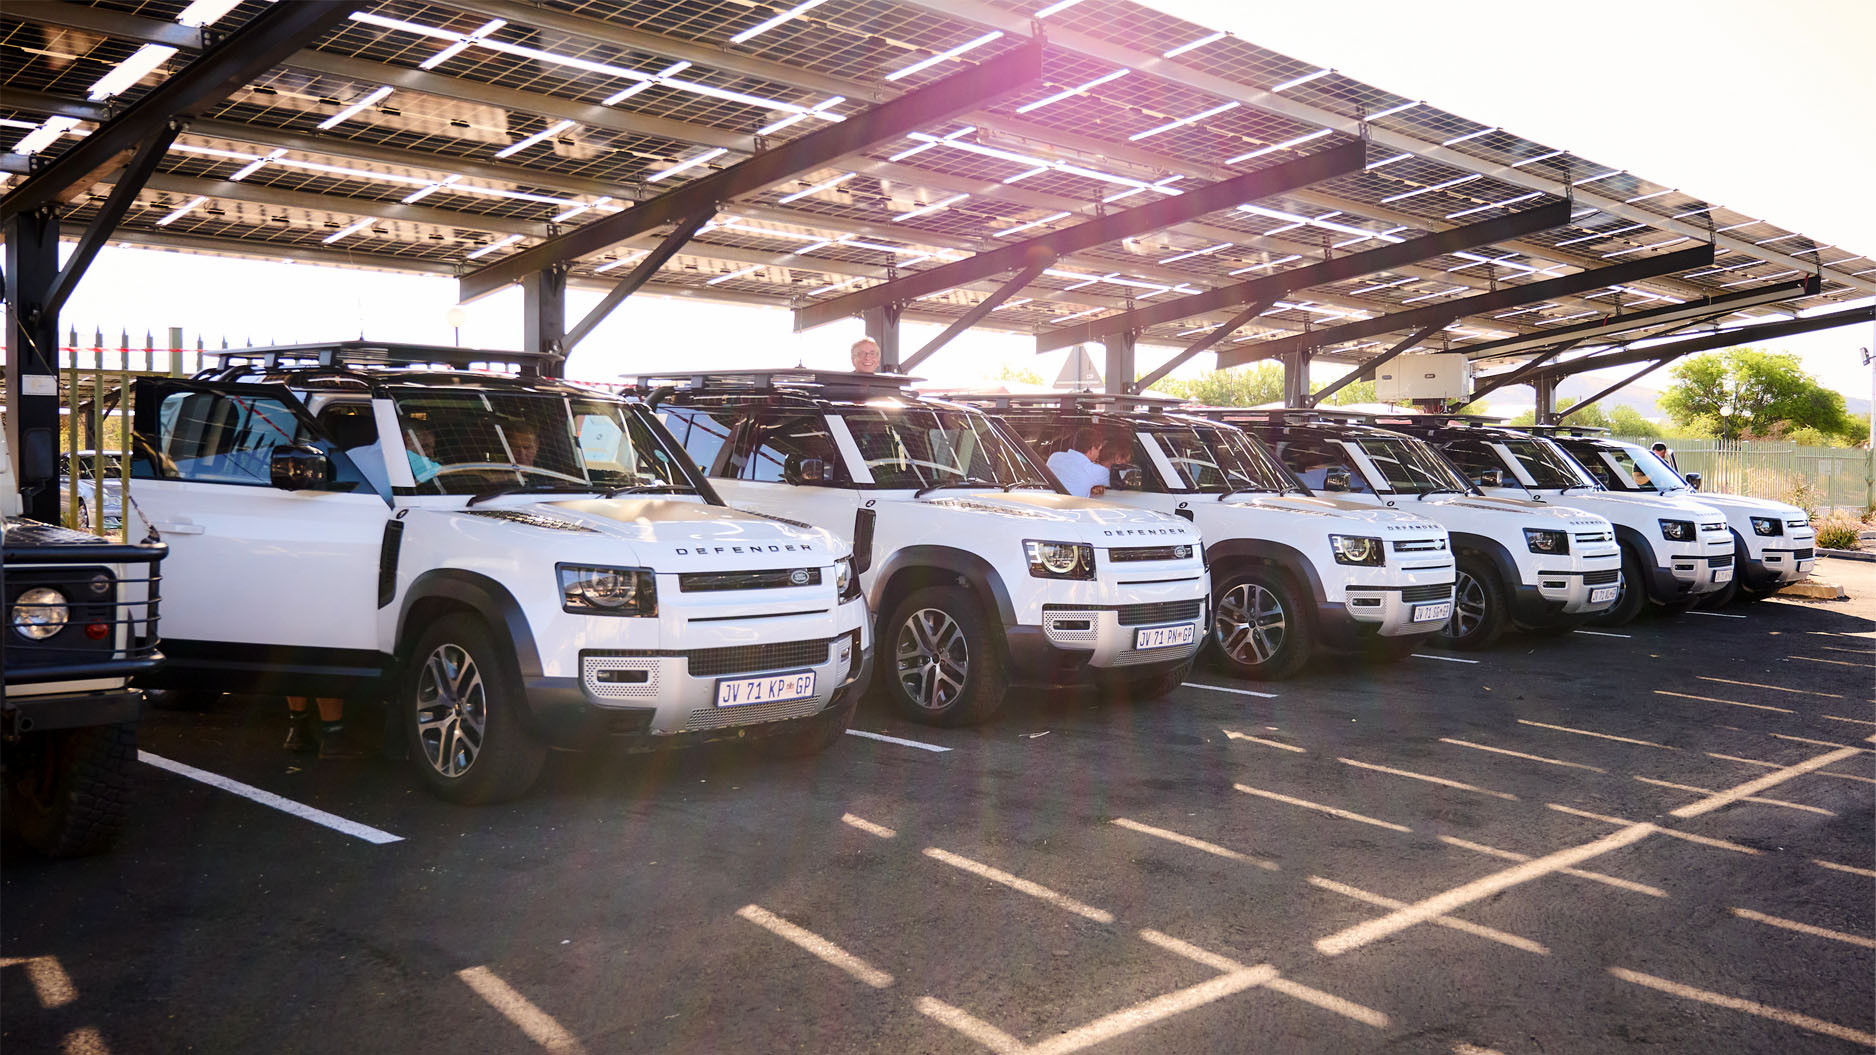 Land Rover Defender Vehicles parked together in Windhoek, Namibia